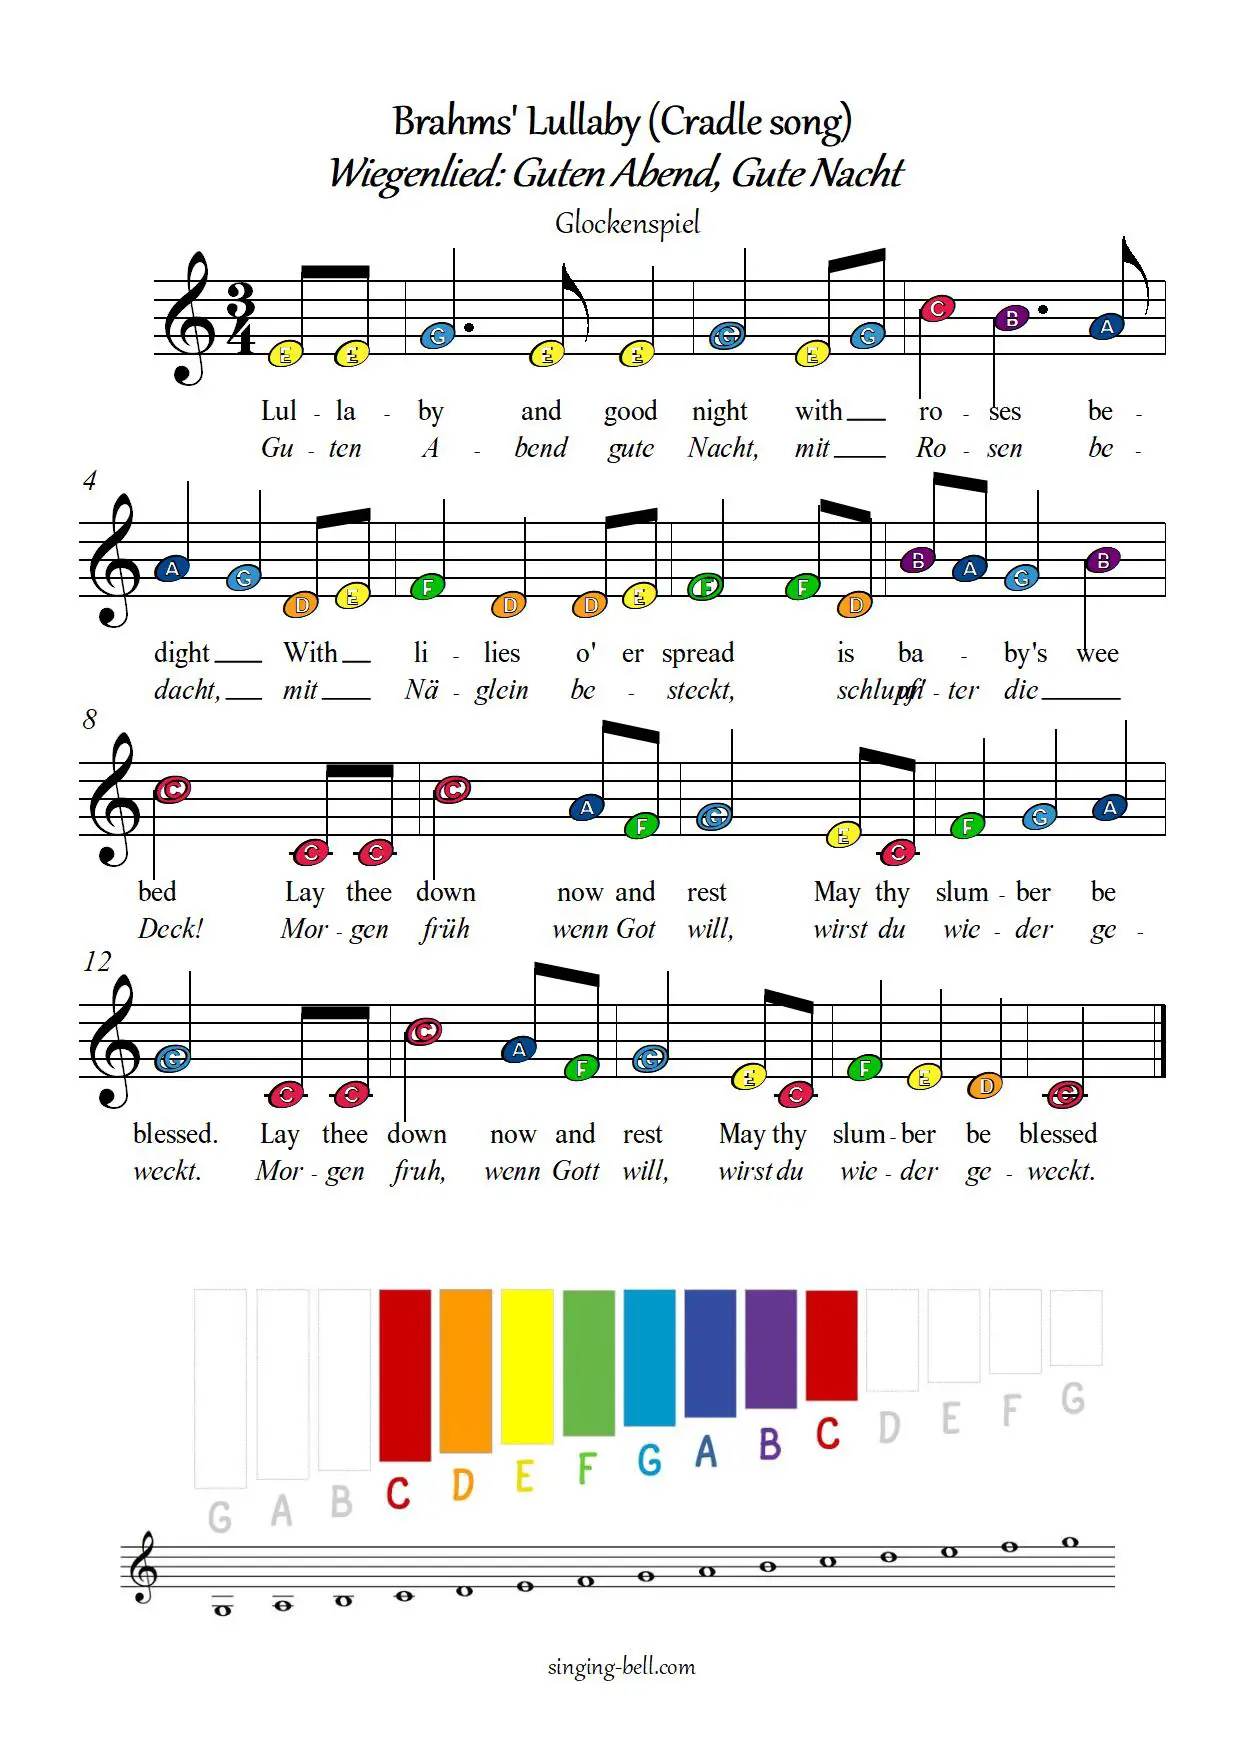 Brahms Lullaby wigenlied guten abend gute nacht free xylophone glockenspiel sheet music color notes chart pdf